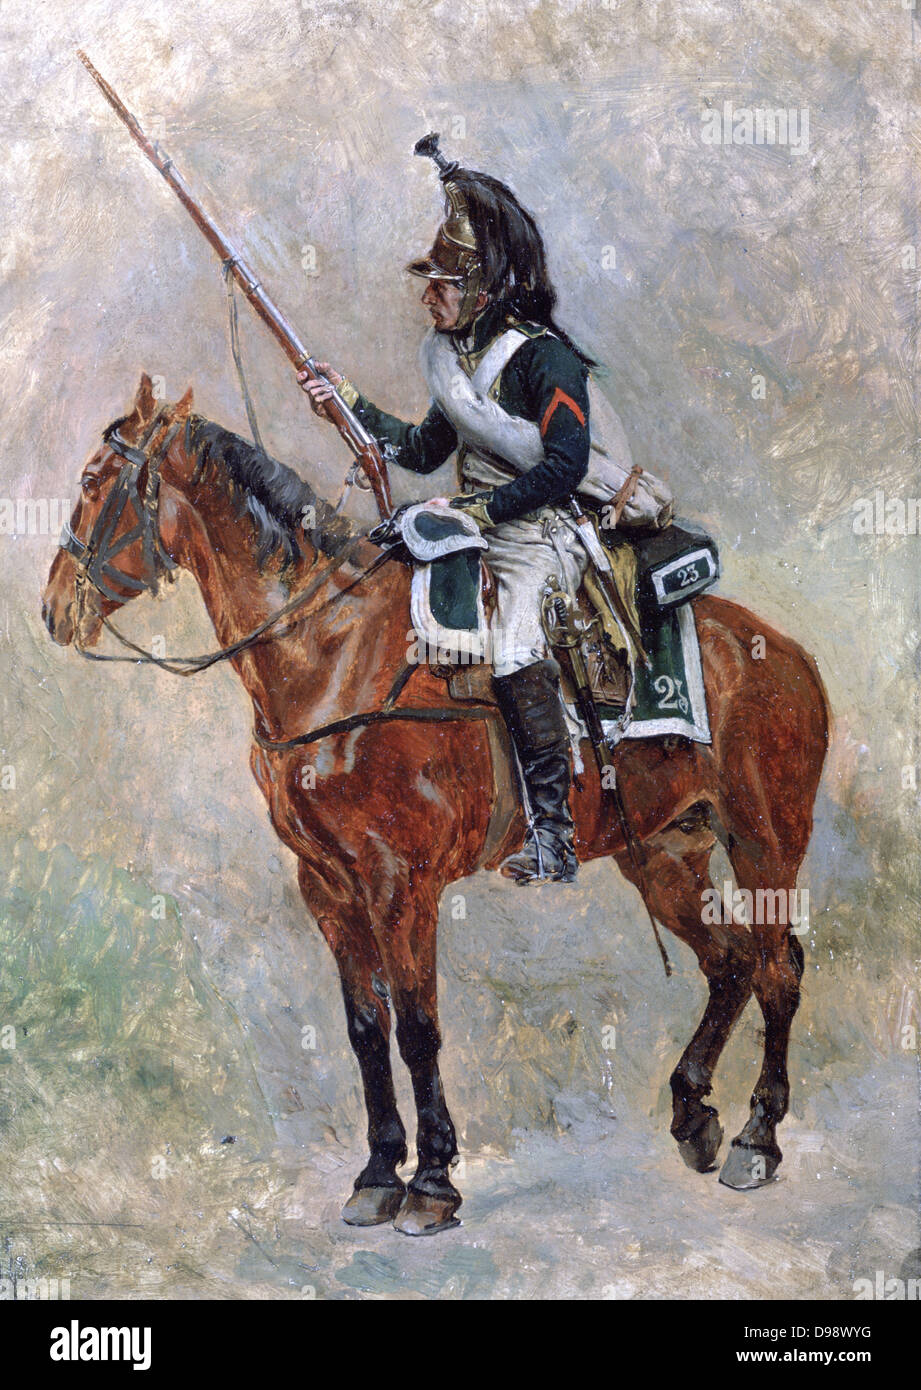 Mounted Dragoon. Jean Loouis Ernest Meissonier (1815-1891) French academic painter. French Soldier Uniform Equipment Firearm Sword Helmet Horse Bay Stock Photo